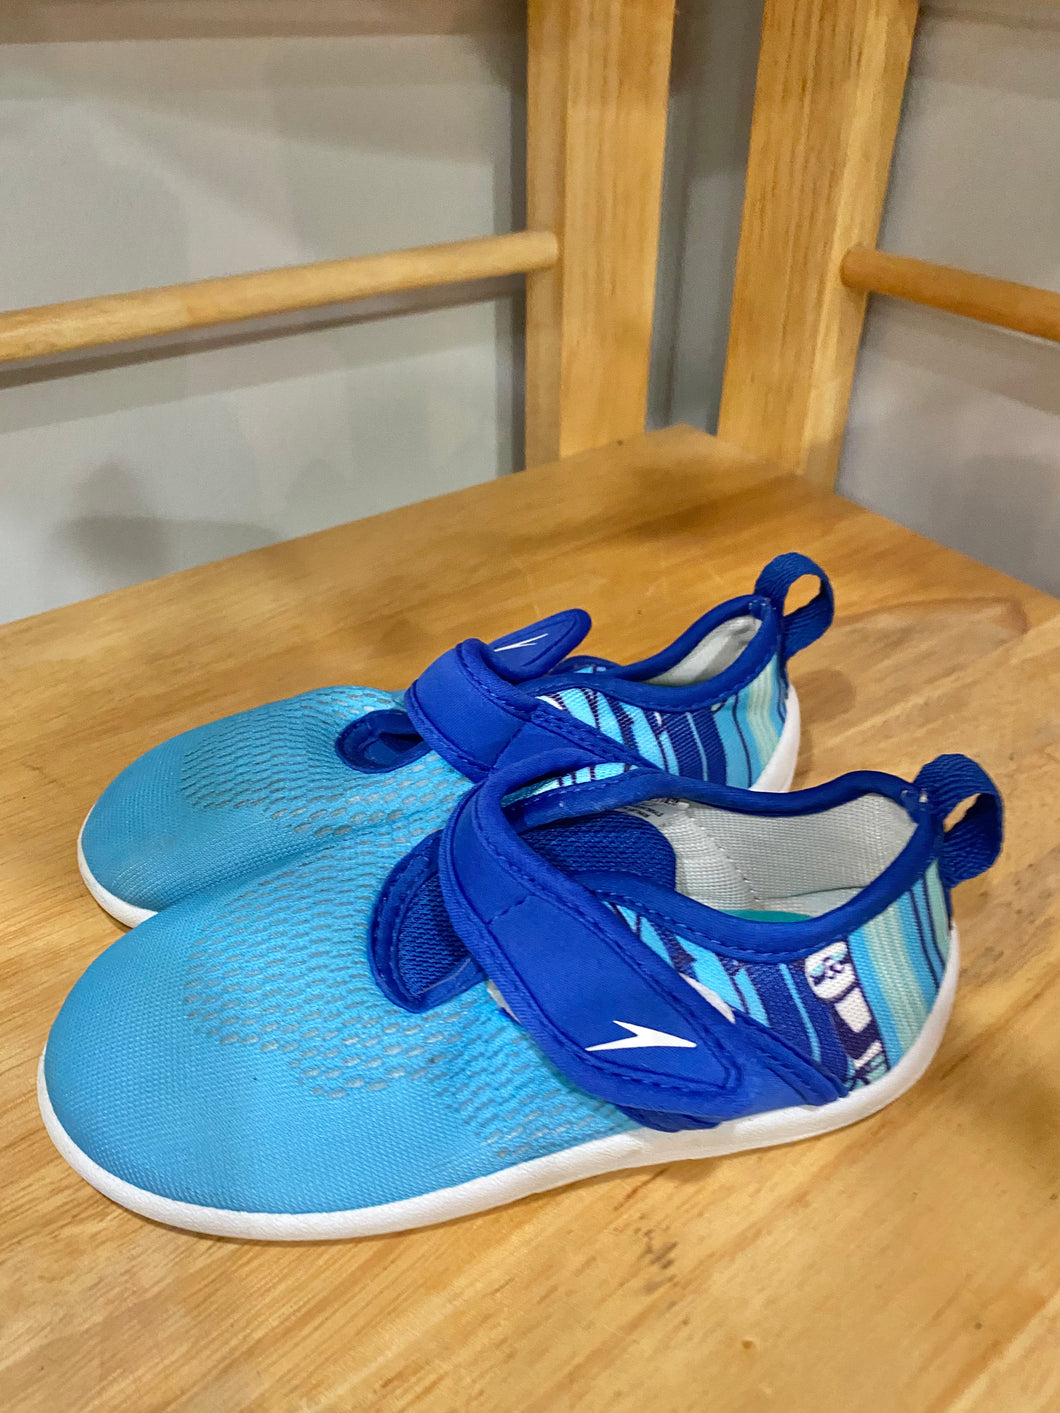 Speedo Blue Water Shoes Size 9-10